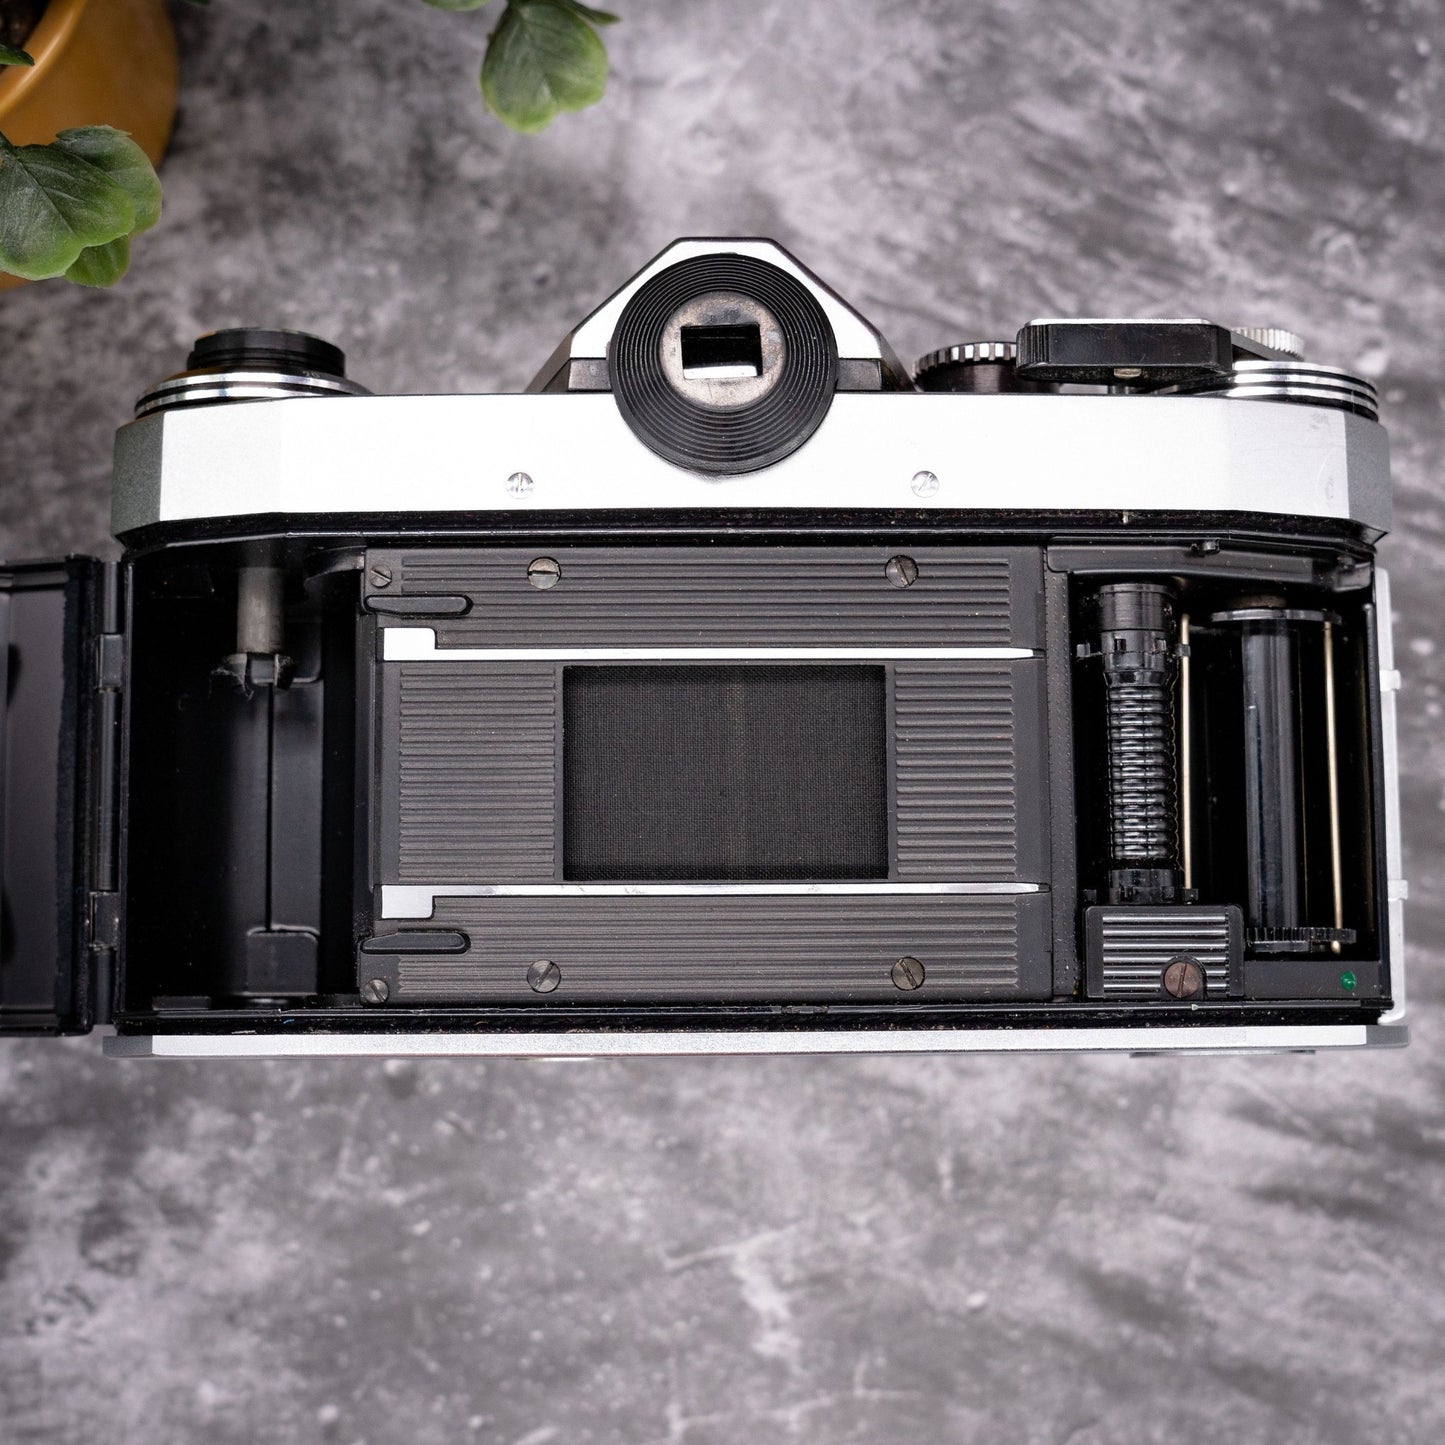 35mm Film Camera Kit | Praktica Super TL + Helios 44-2 58mm f/2 Lens, Roll Of Expired Film, Original Leather Case - Expired Film Club